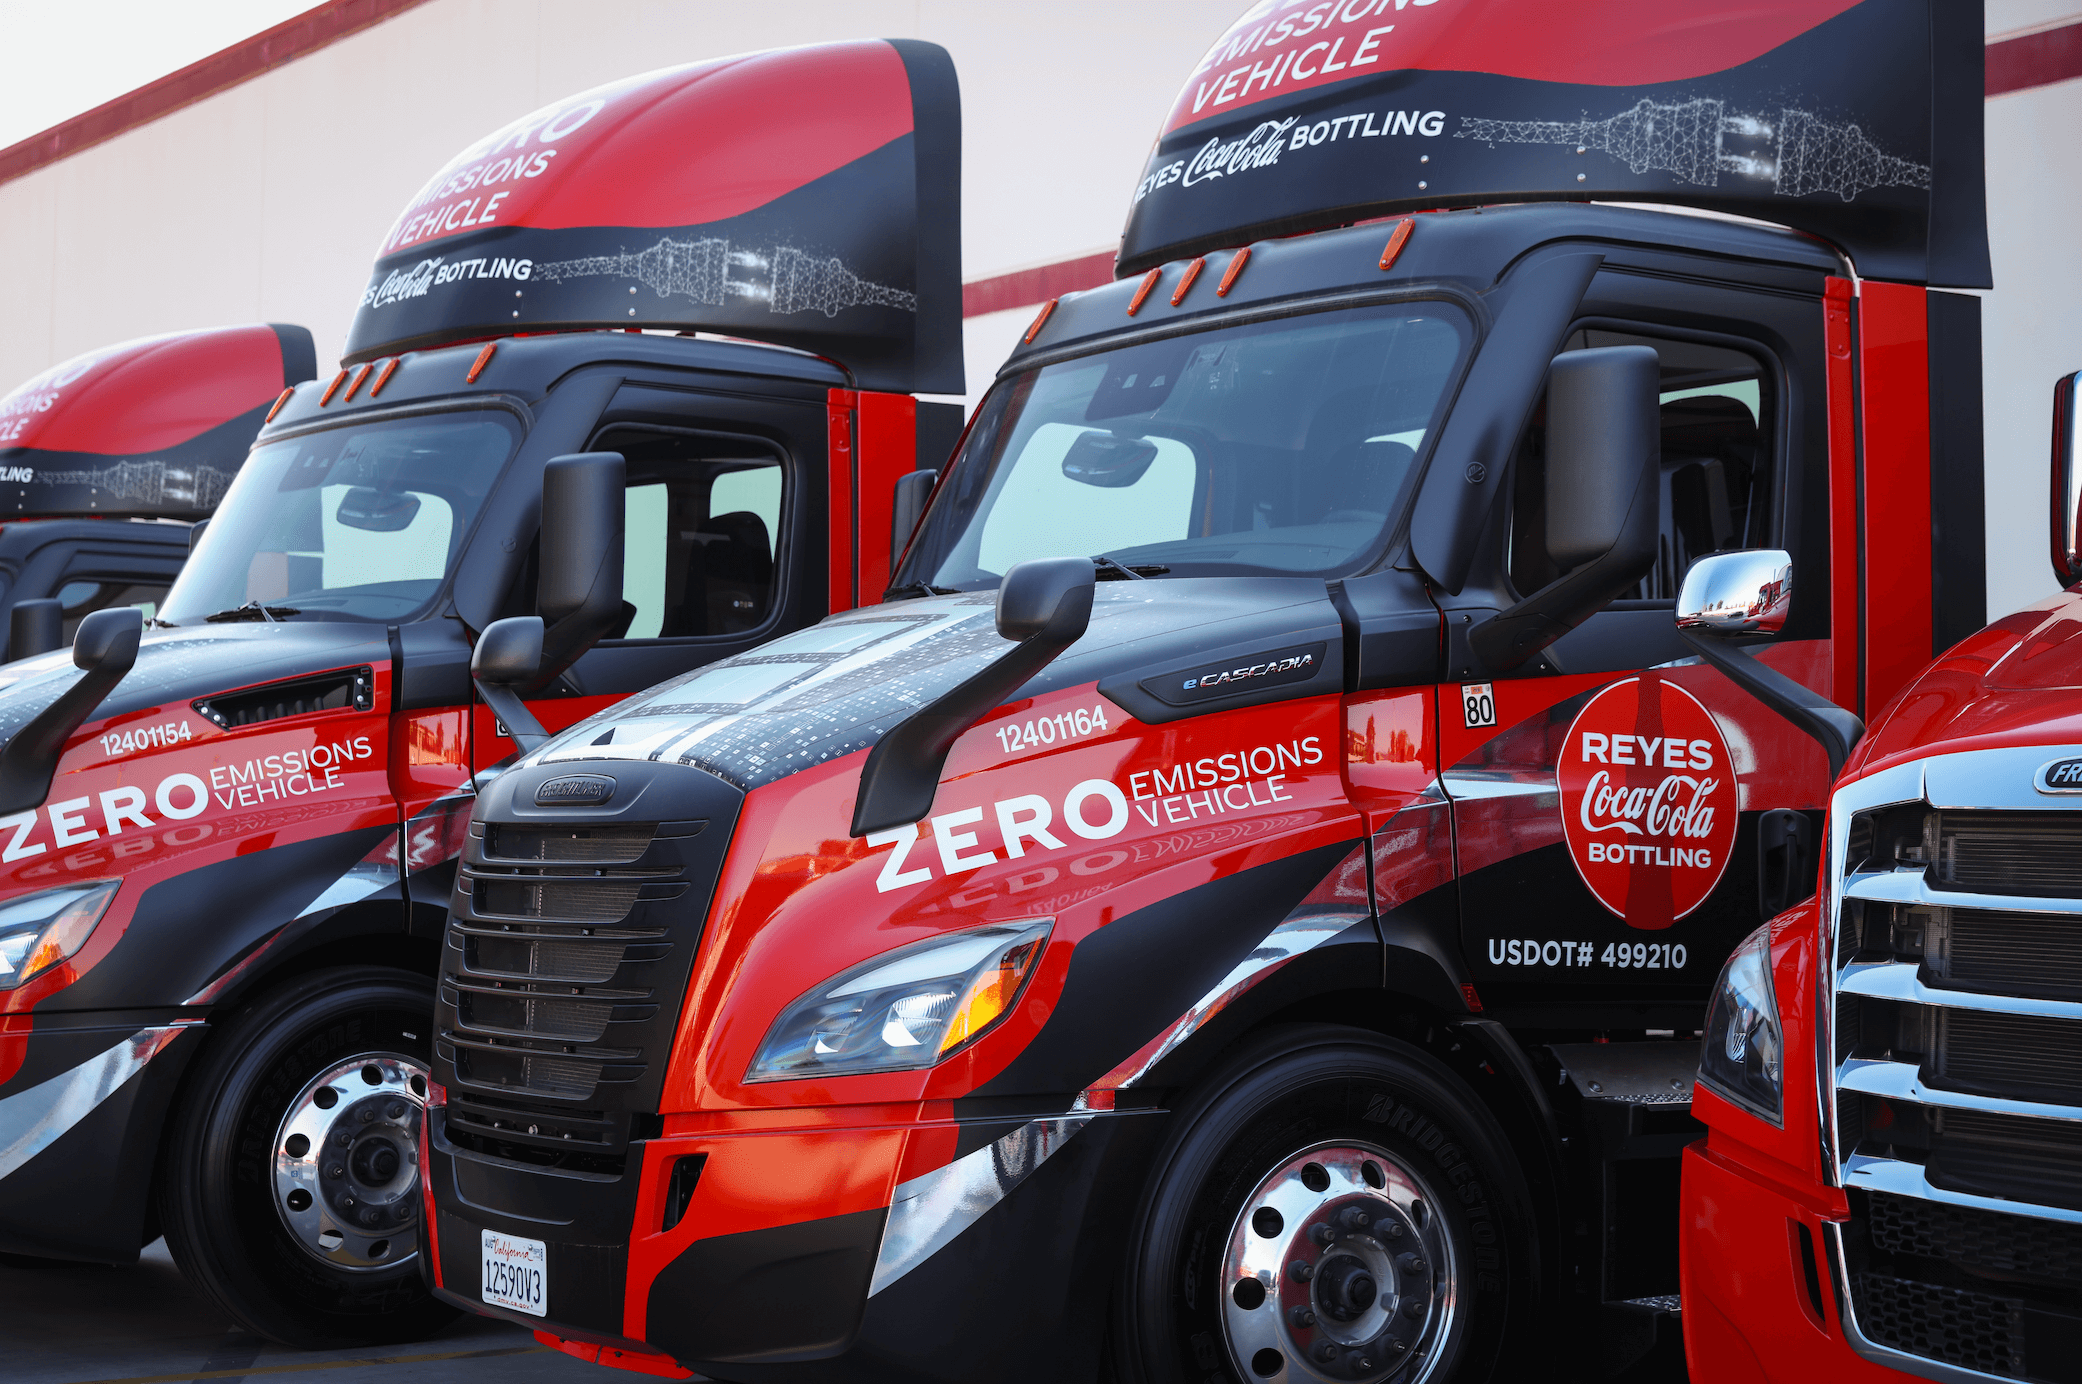 Reyes Coca-Cola Bottling zero emission trucks in a row.